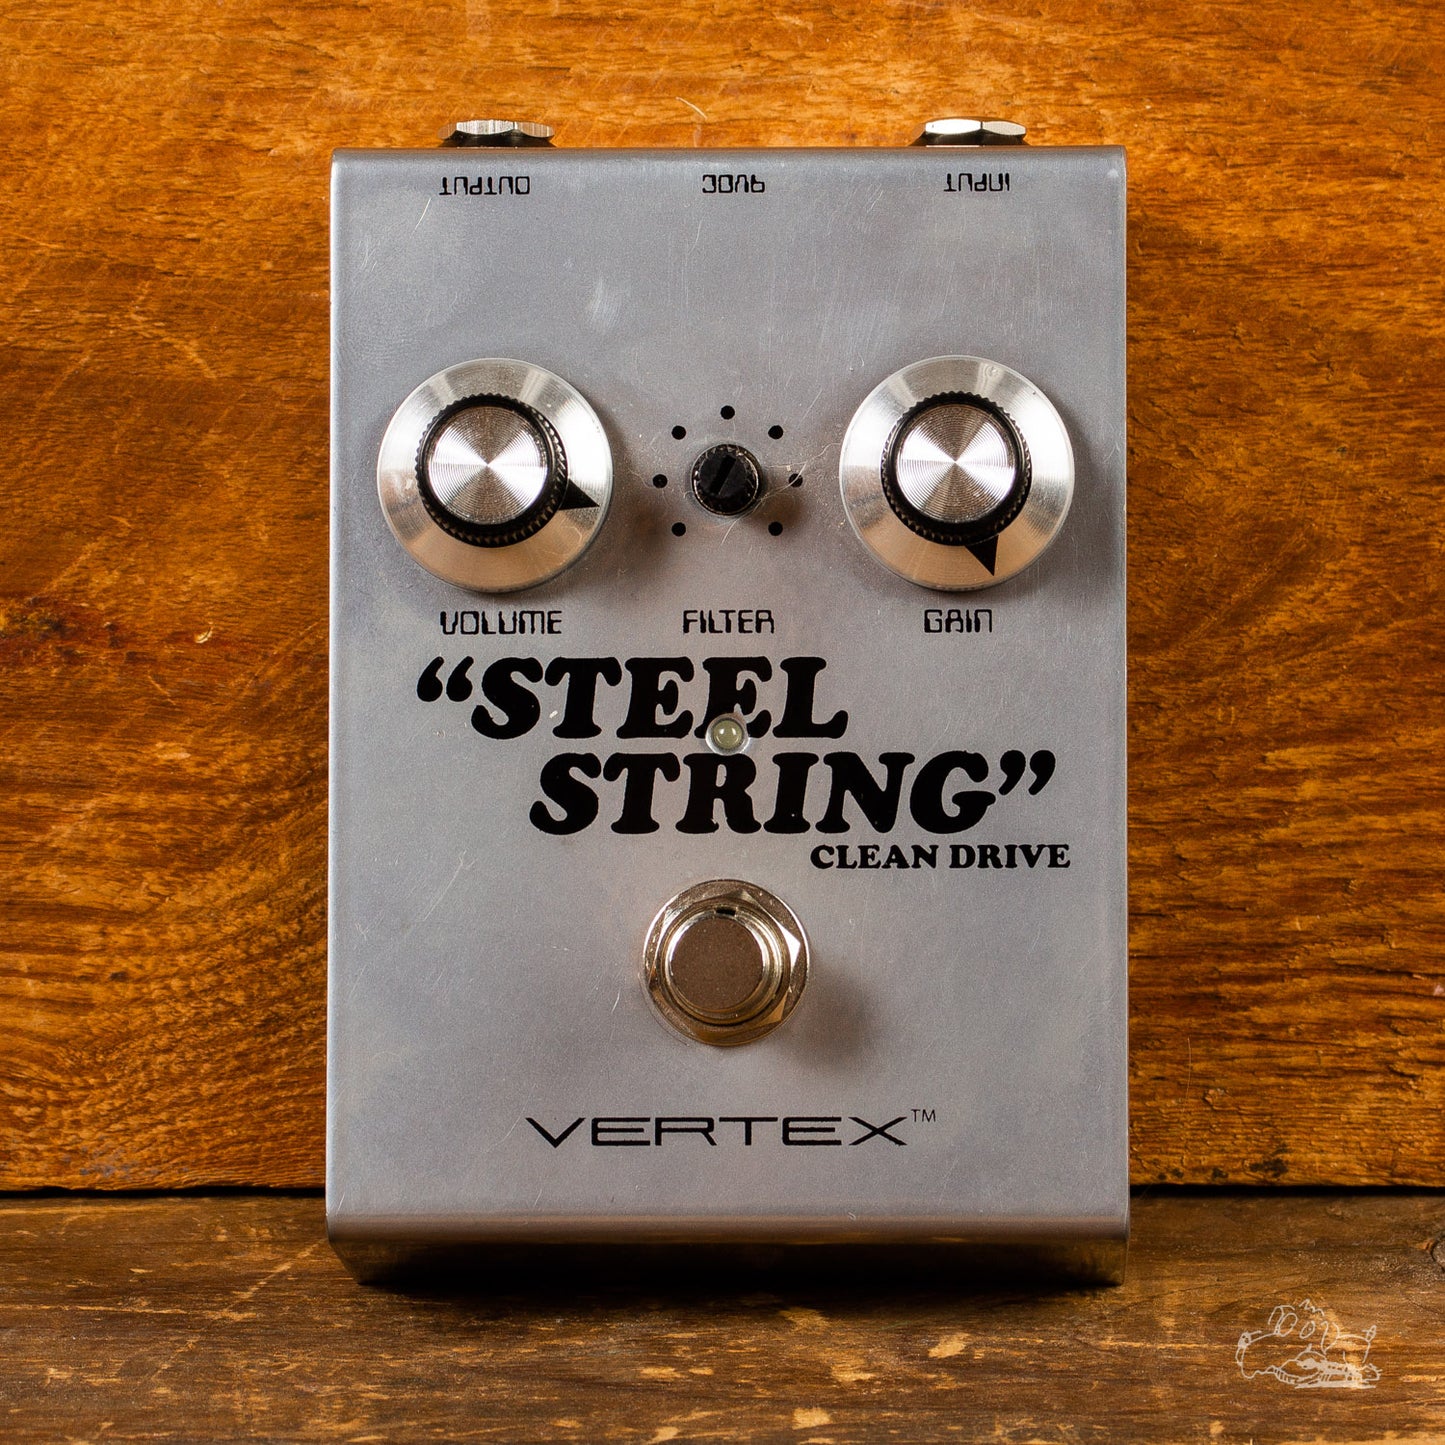 Vertex Steel String "Clean Drive" Pedal